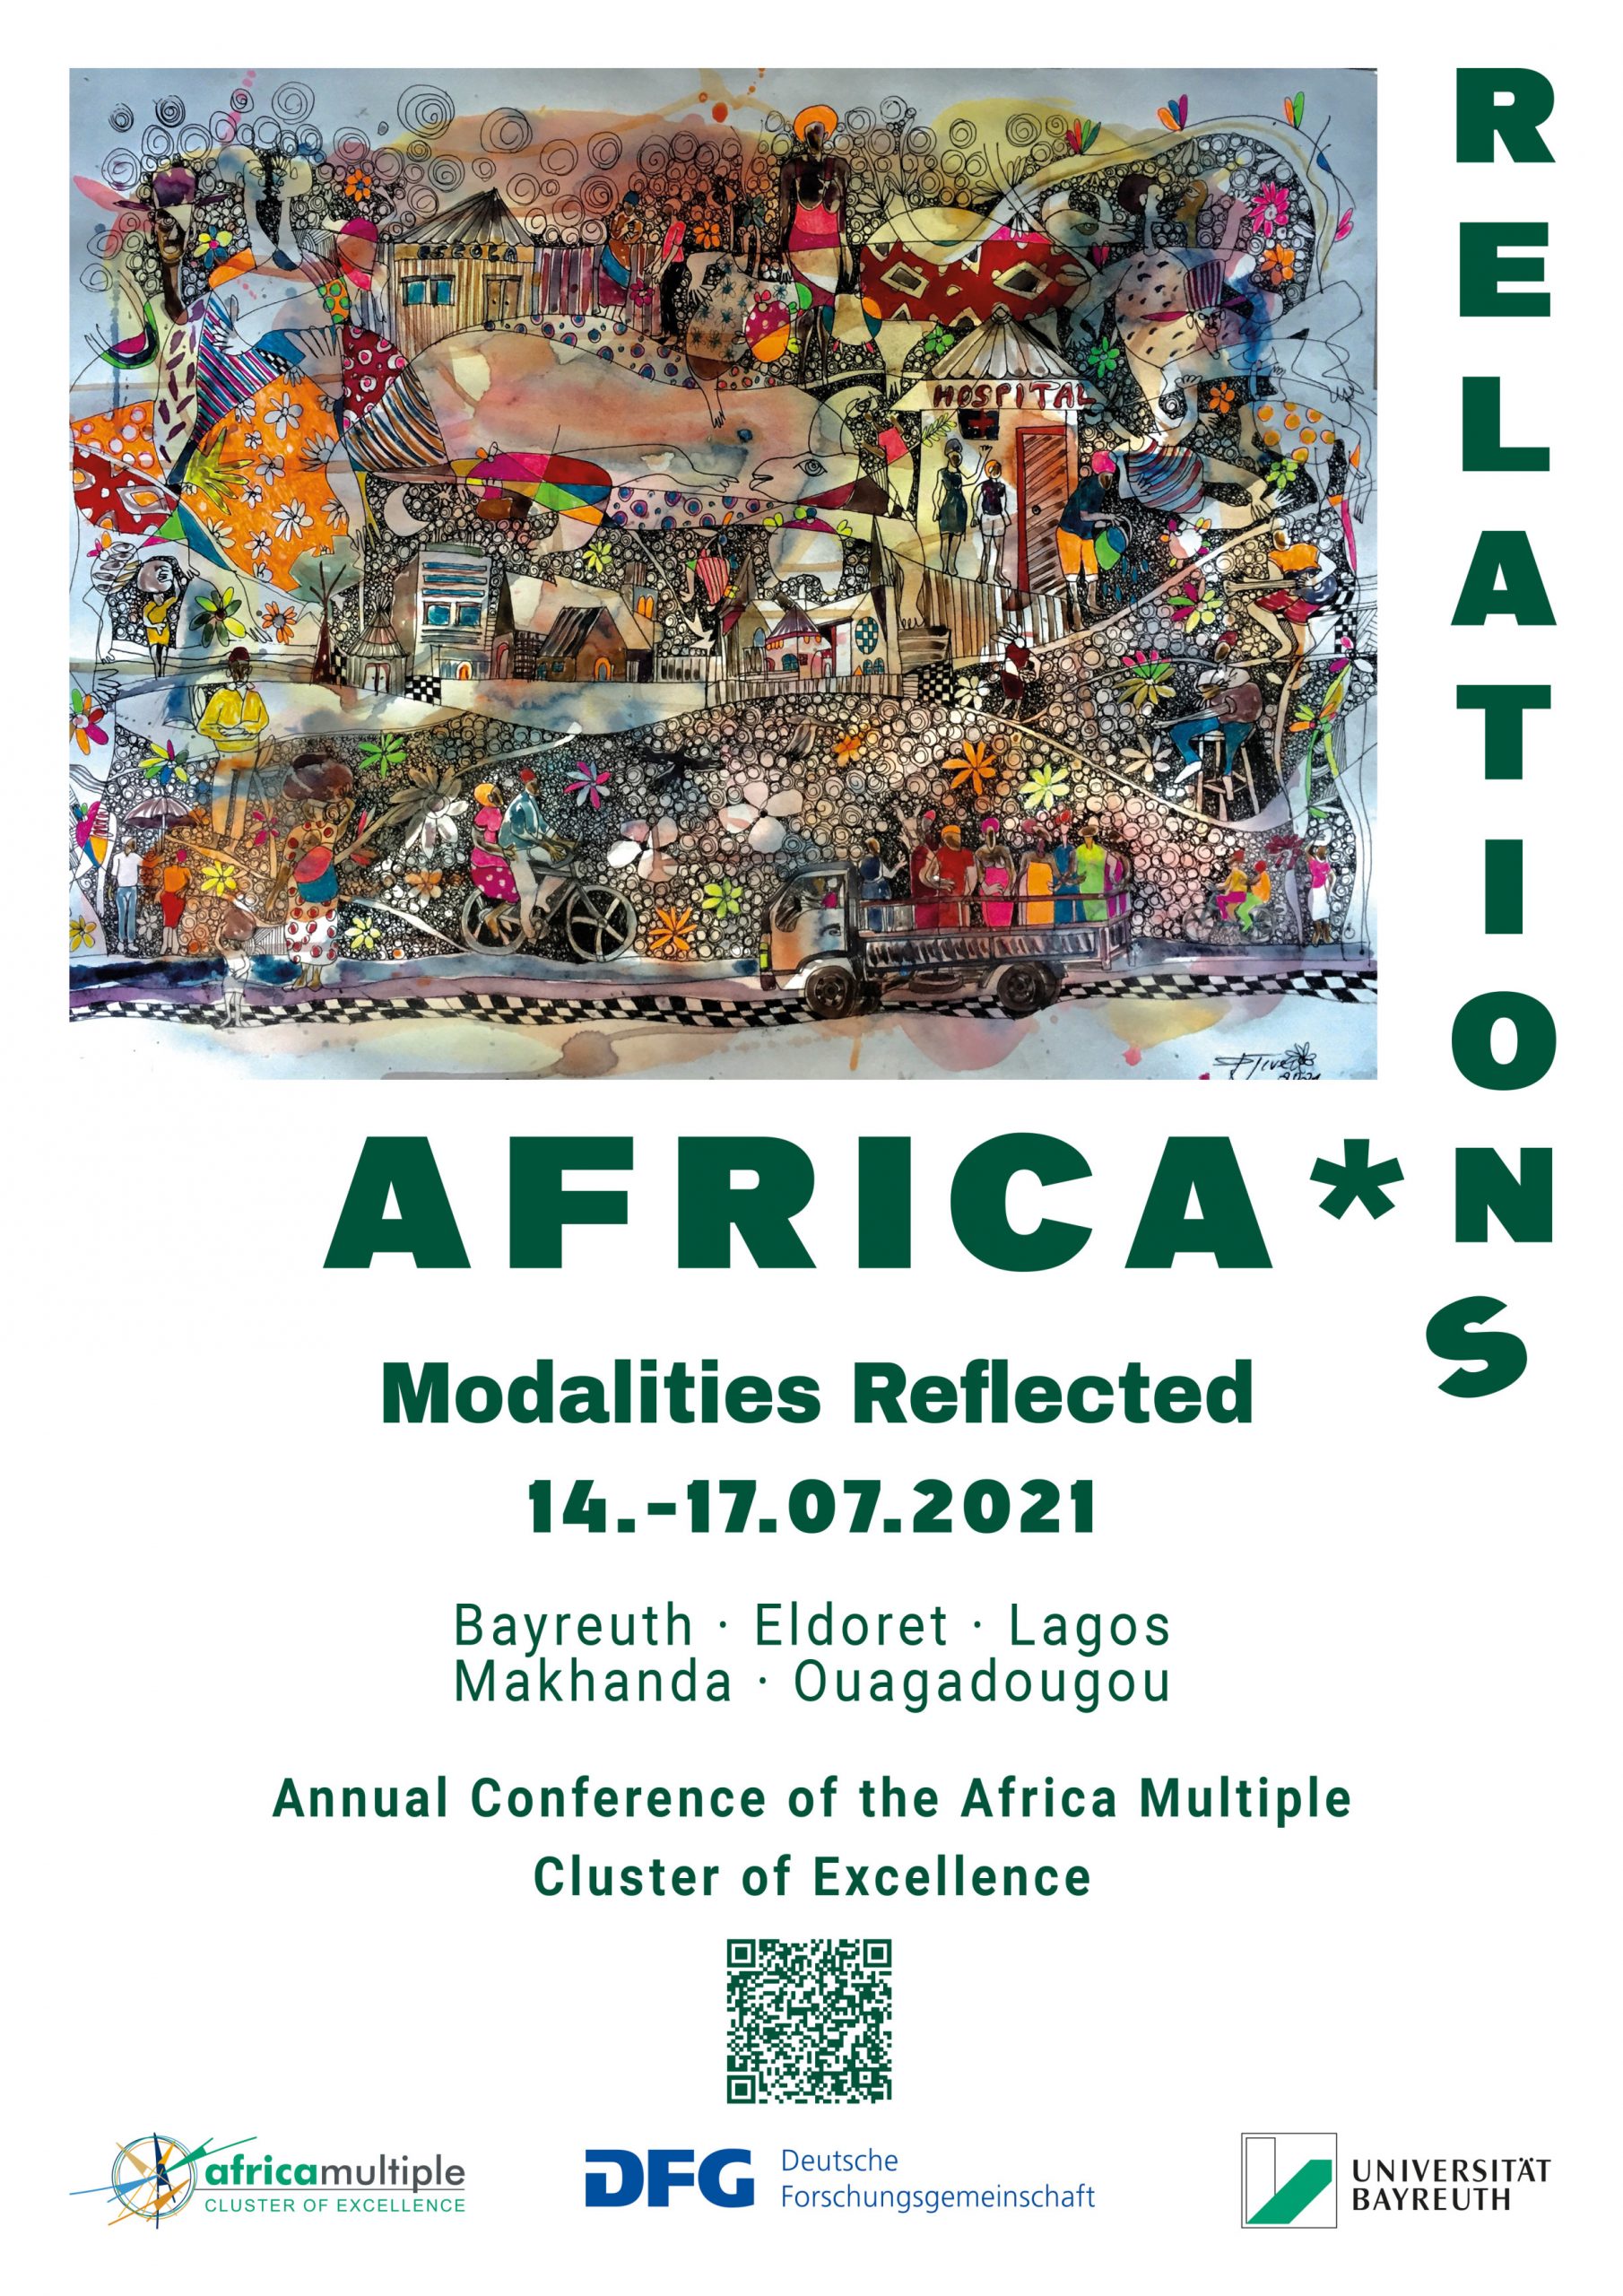 2ème Conférence internationale du cluster d’excellence Africamultiple : «Africa*n Relations: Modalities Reflected »